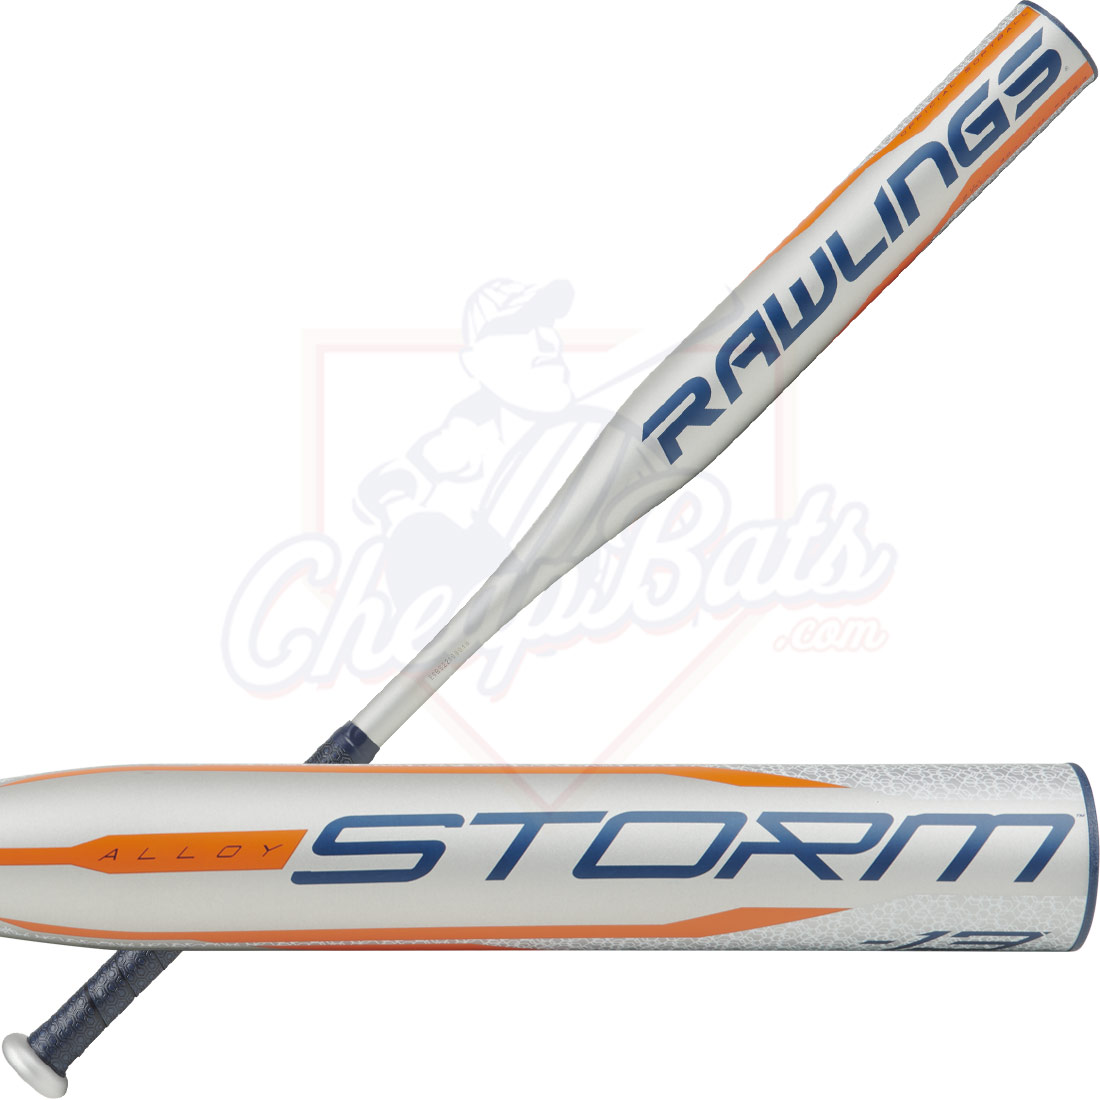 2020 Rawlings Storm Fastpitch Softball Bat -13oz FPZS13